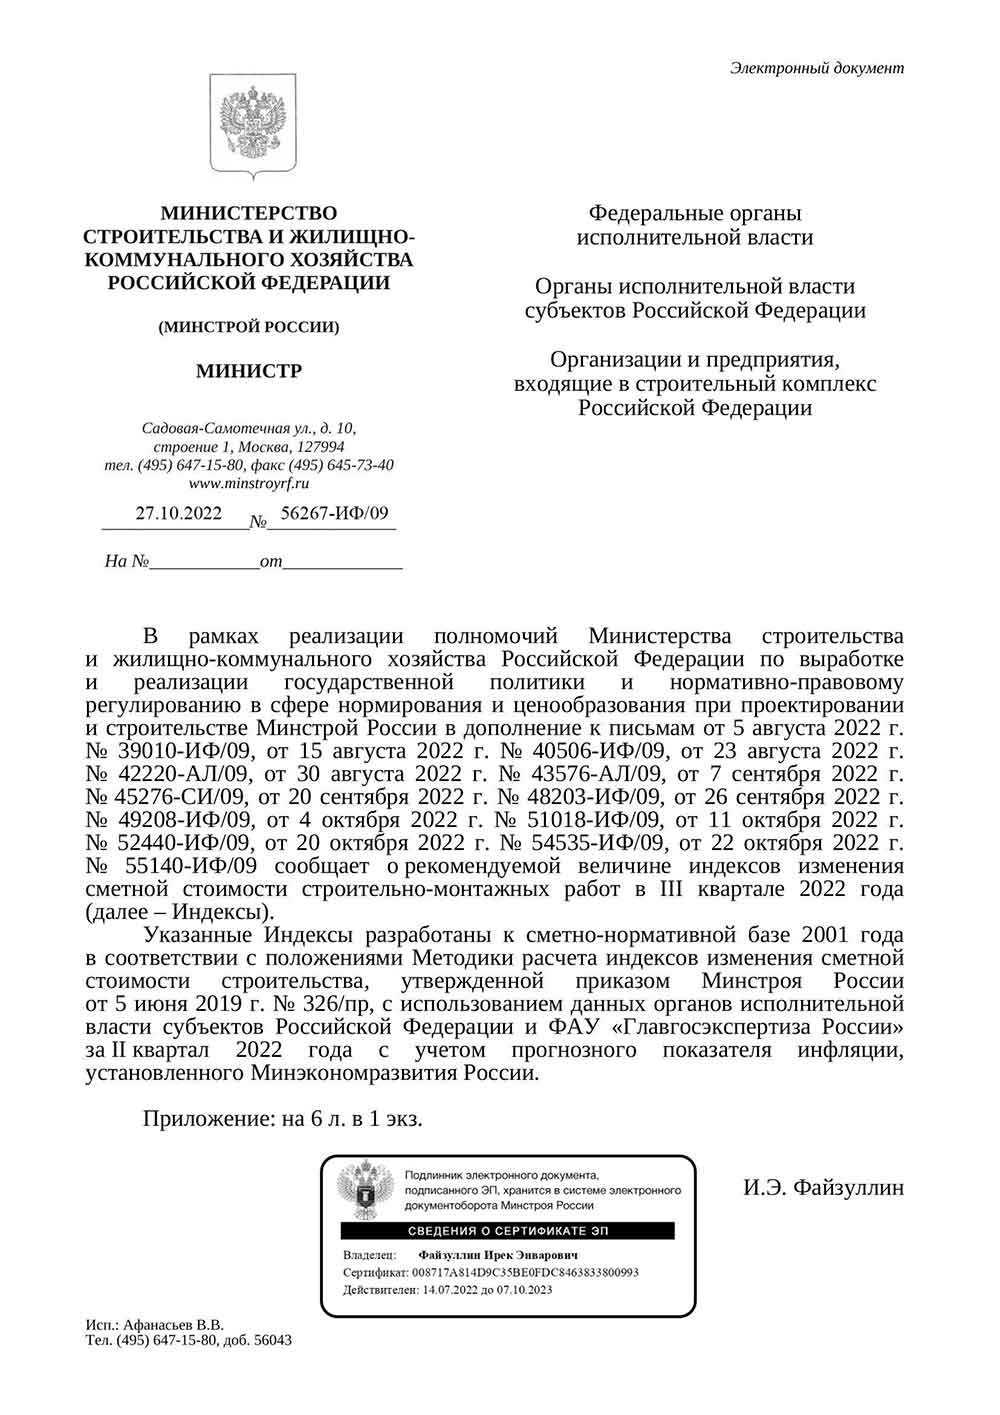 Письмо Минстроя РФ №56267-ИФ/09 от 27.10.2022 г.